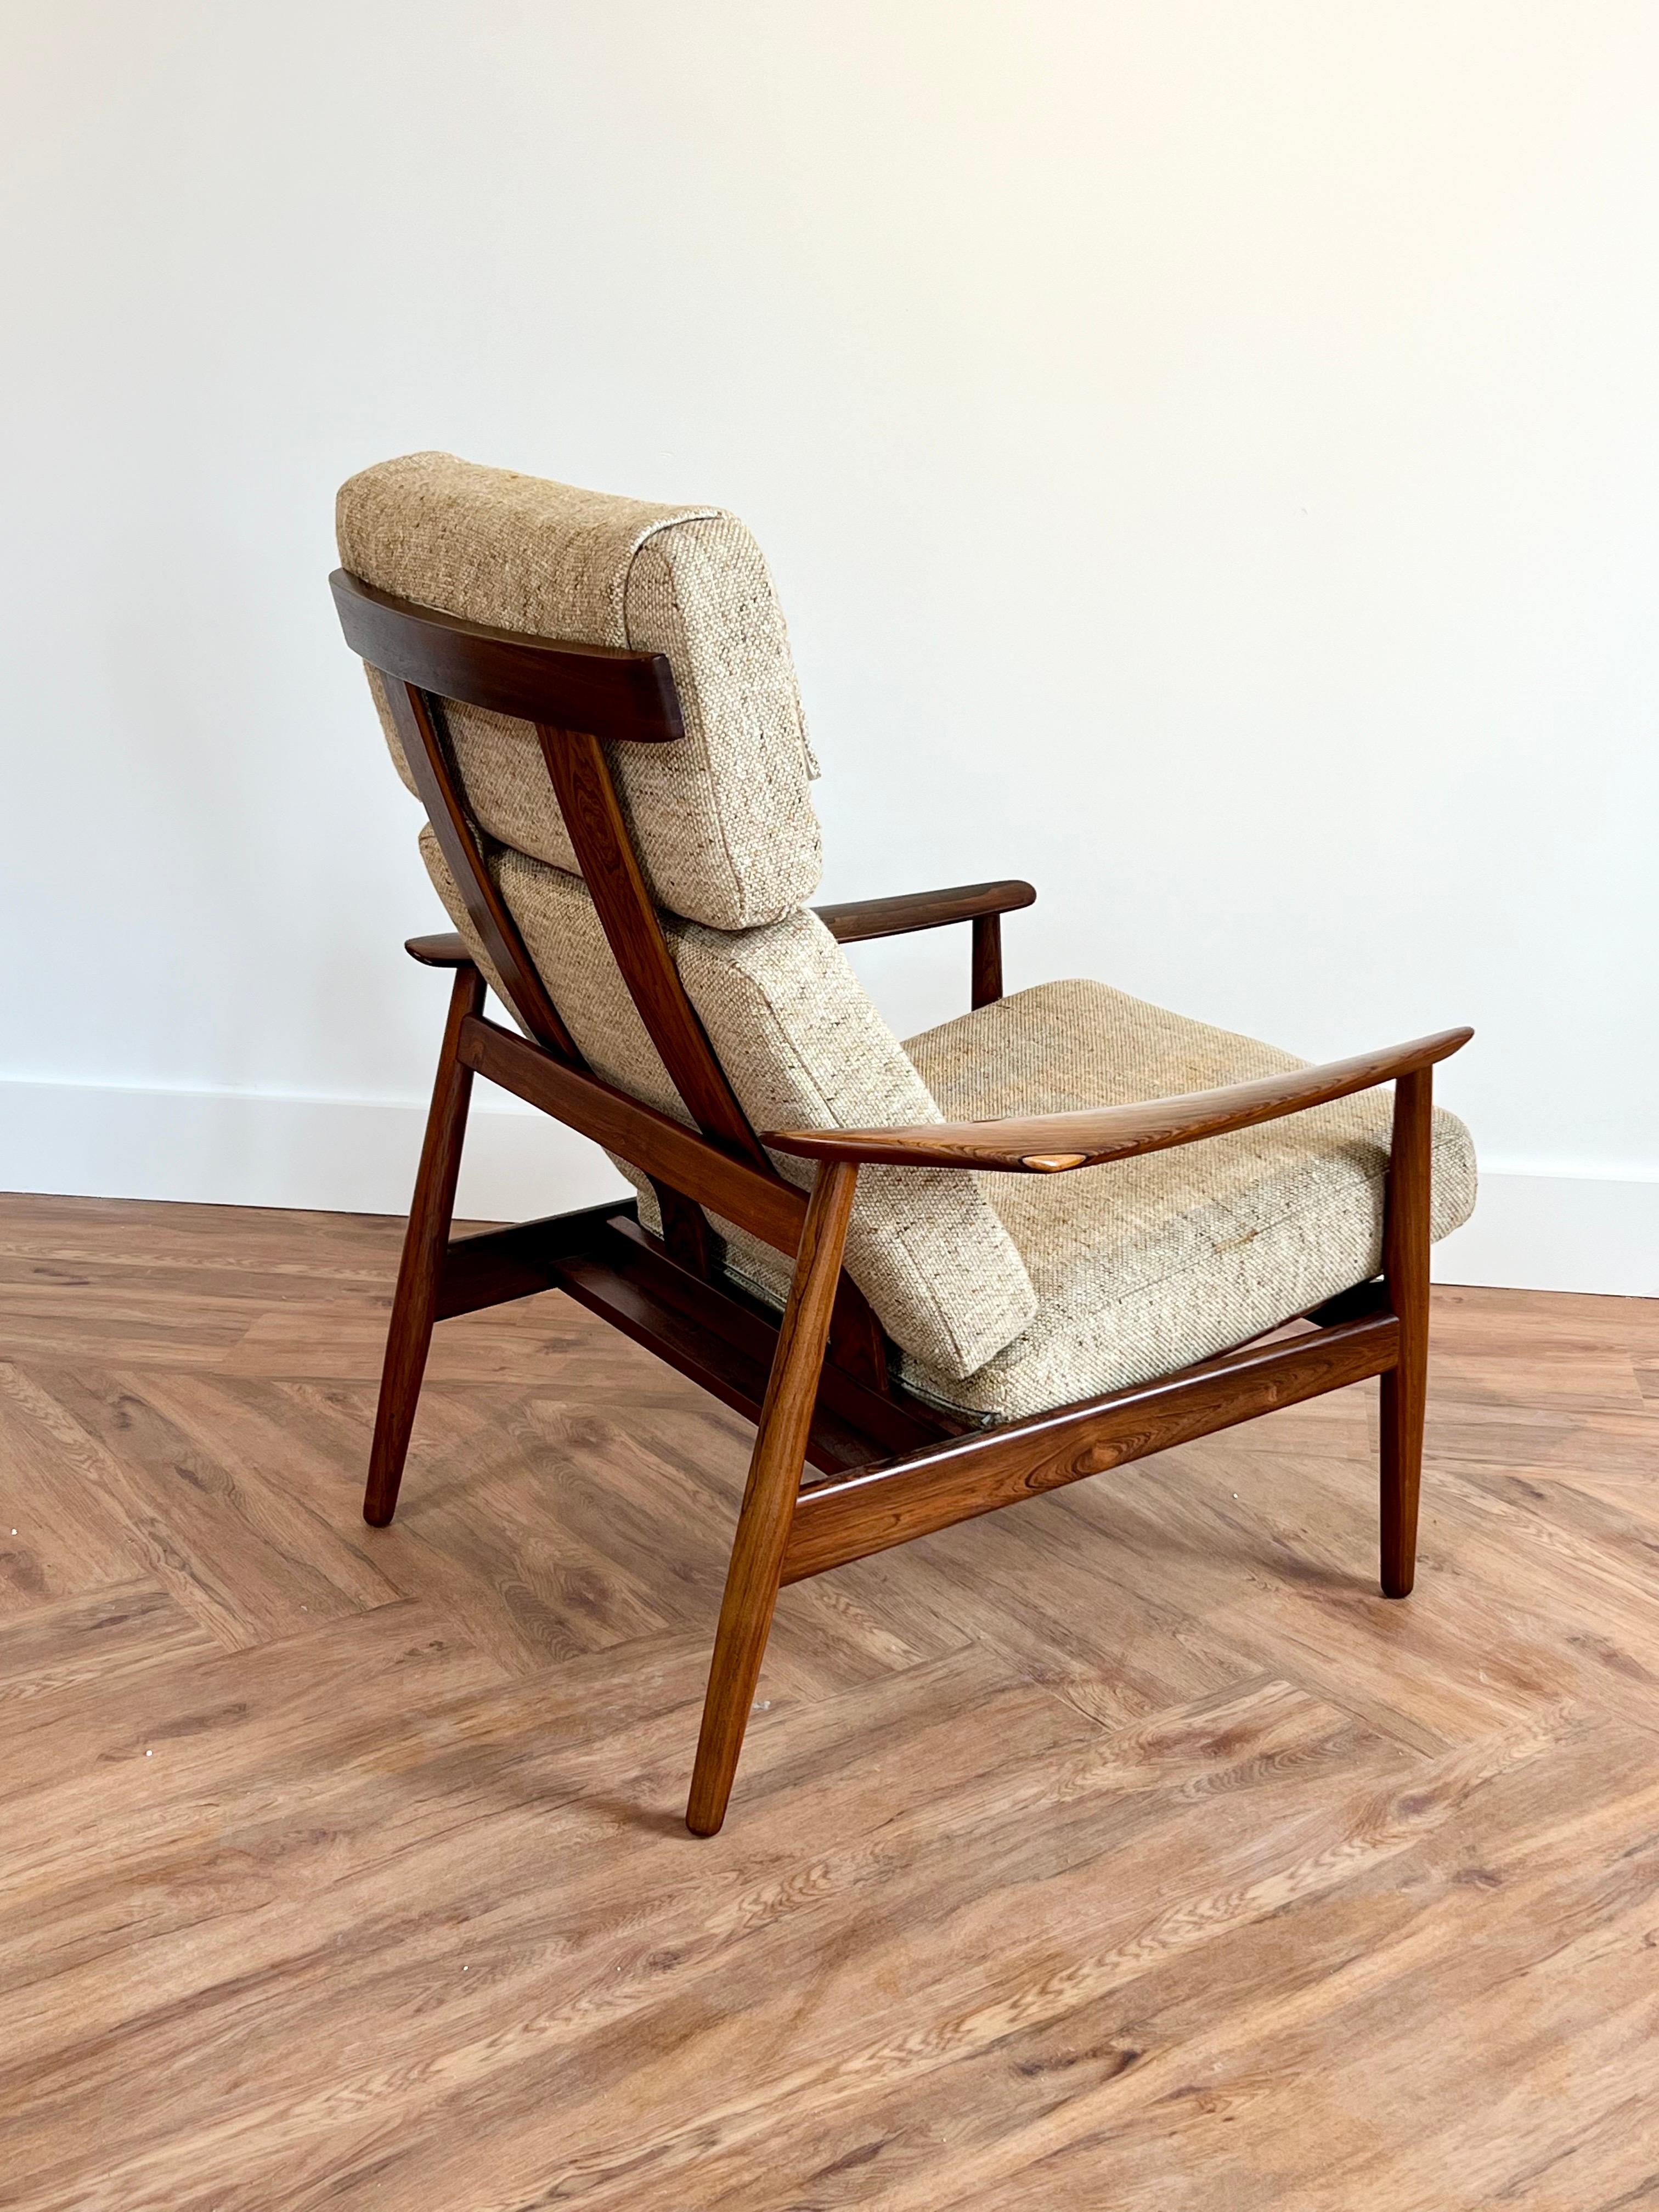 Rare Arne Vodder Rosewood FD164 Adjustable Lounge Chair c1960s For Sale 4